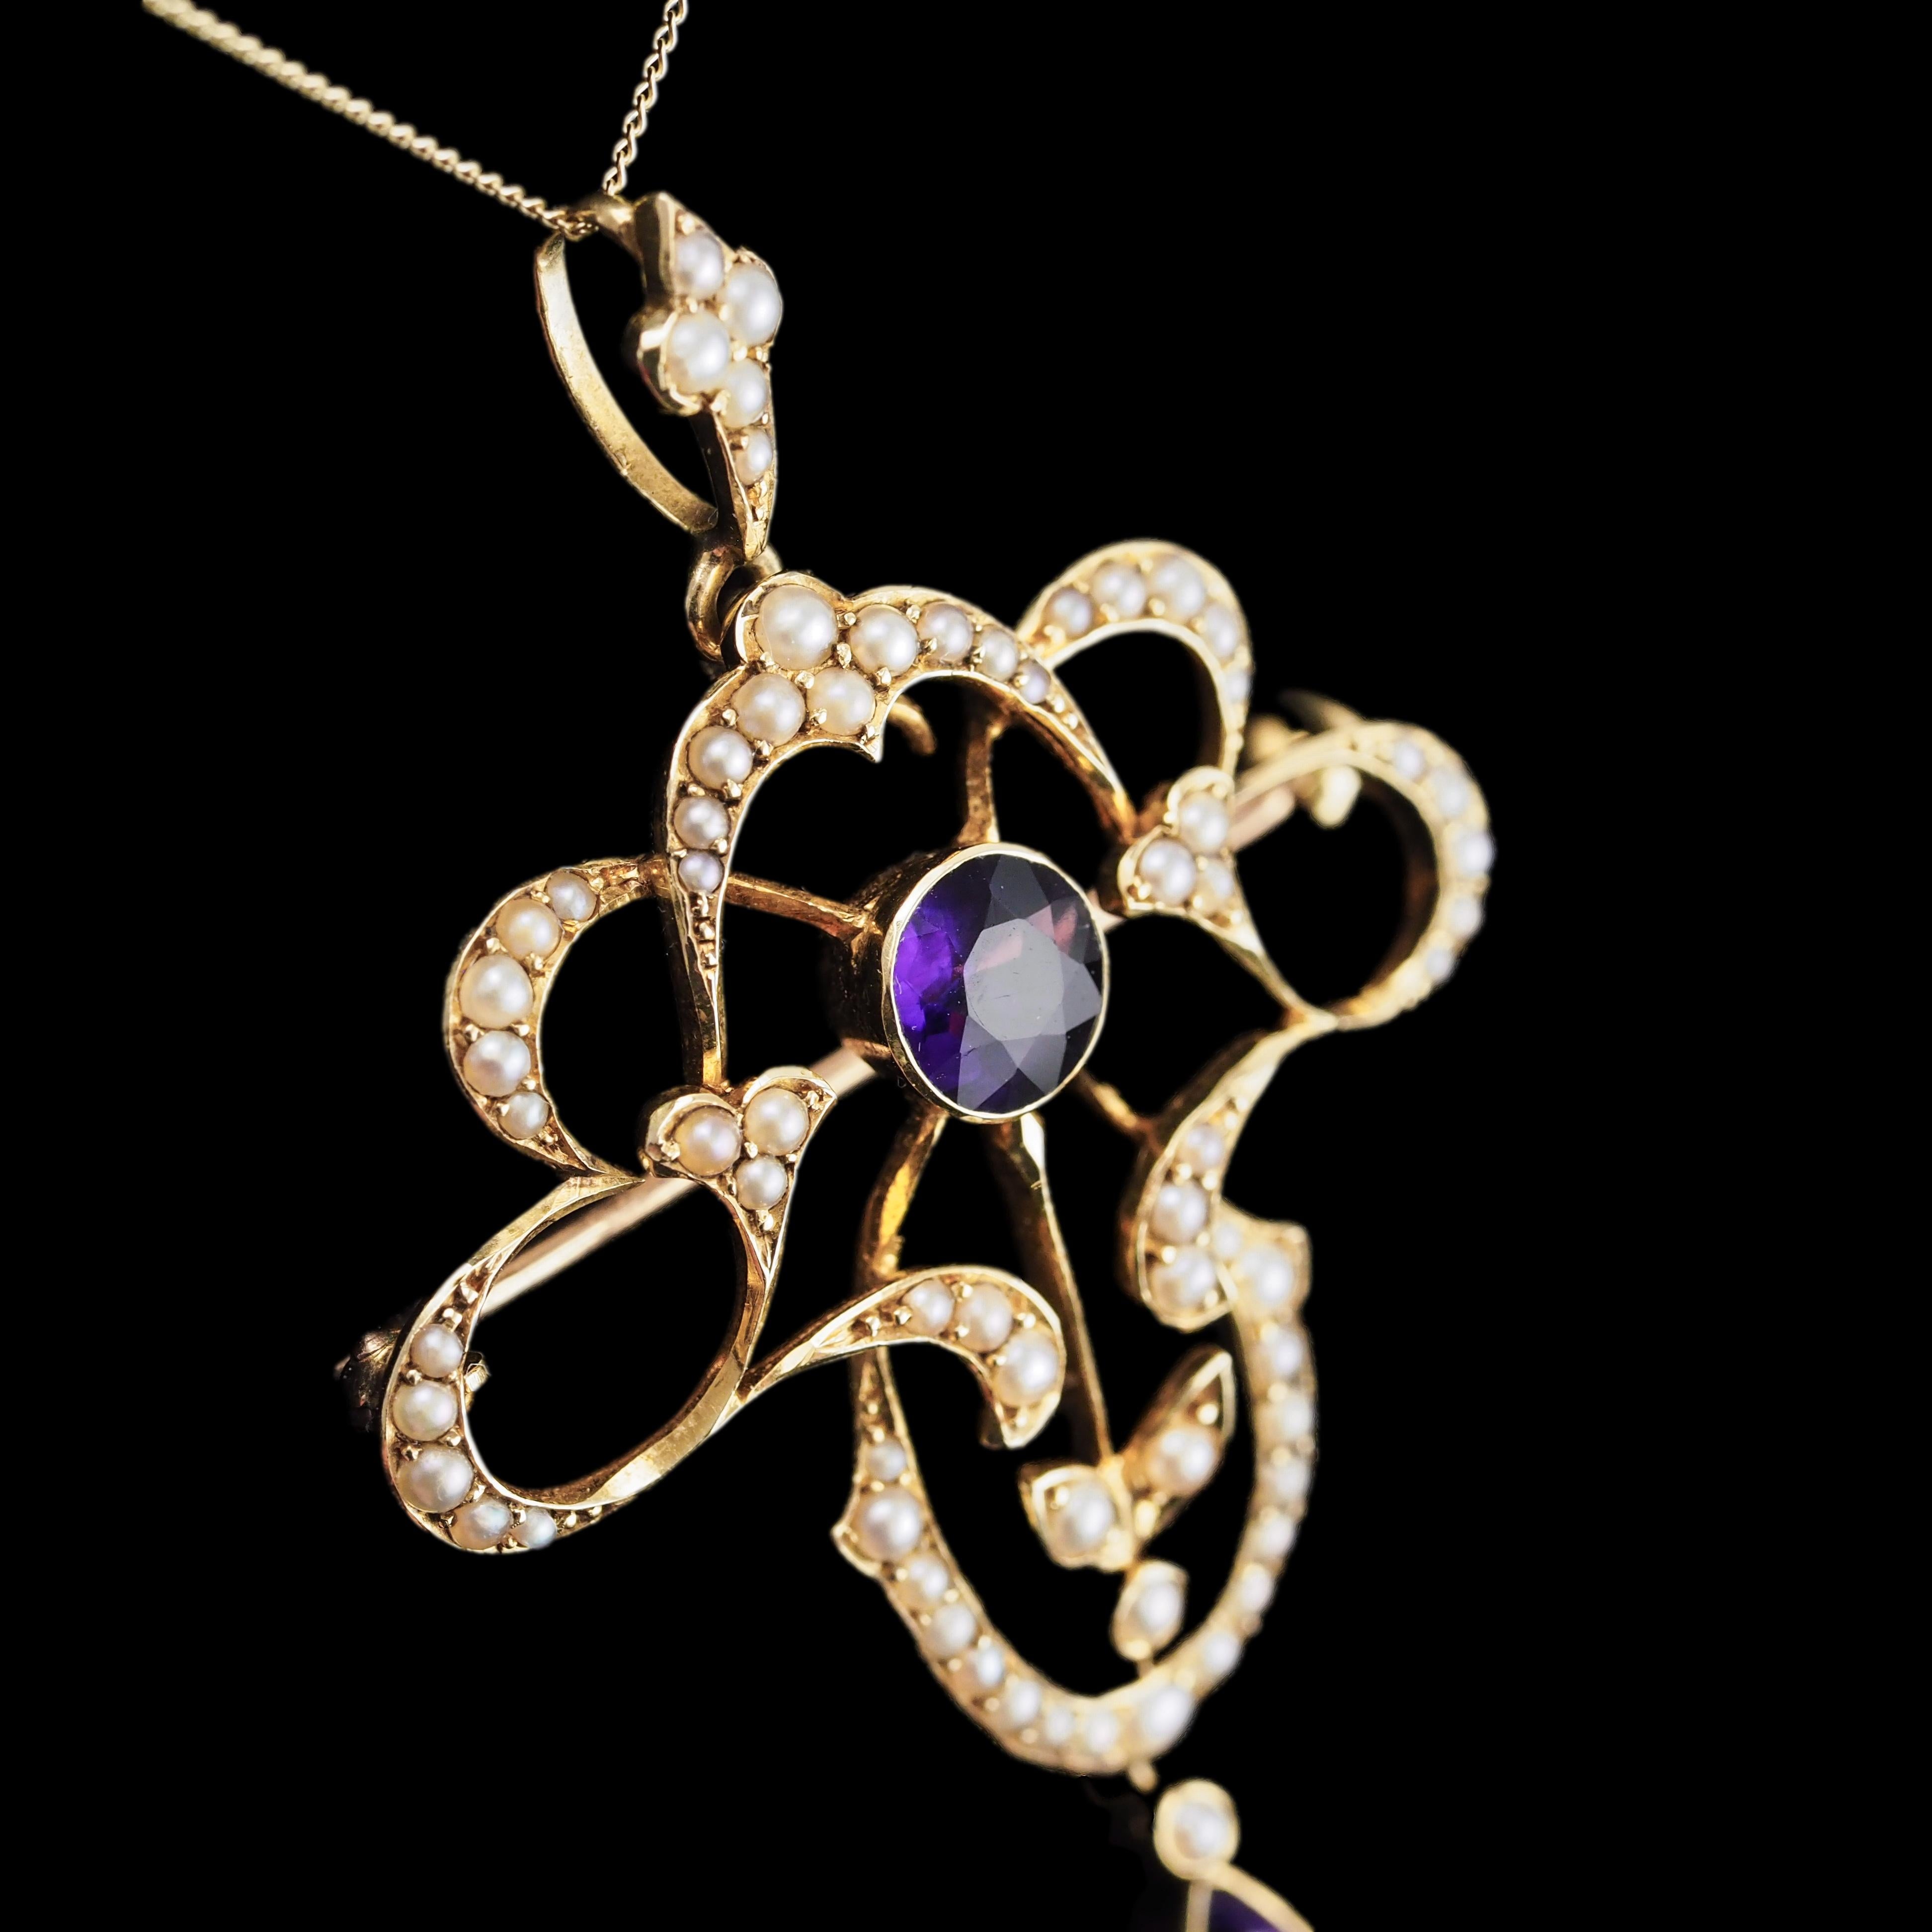 Antique Edwardian Amethyst & Seed Pearl 15K Gold Pendant Necklace Art Nouveau  For Sale 10